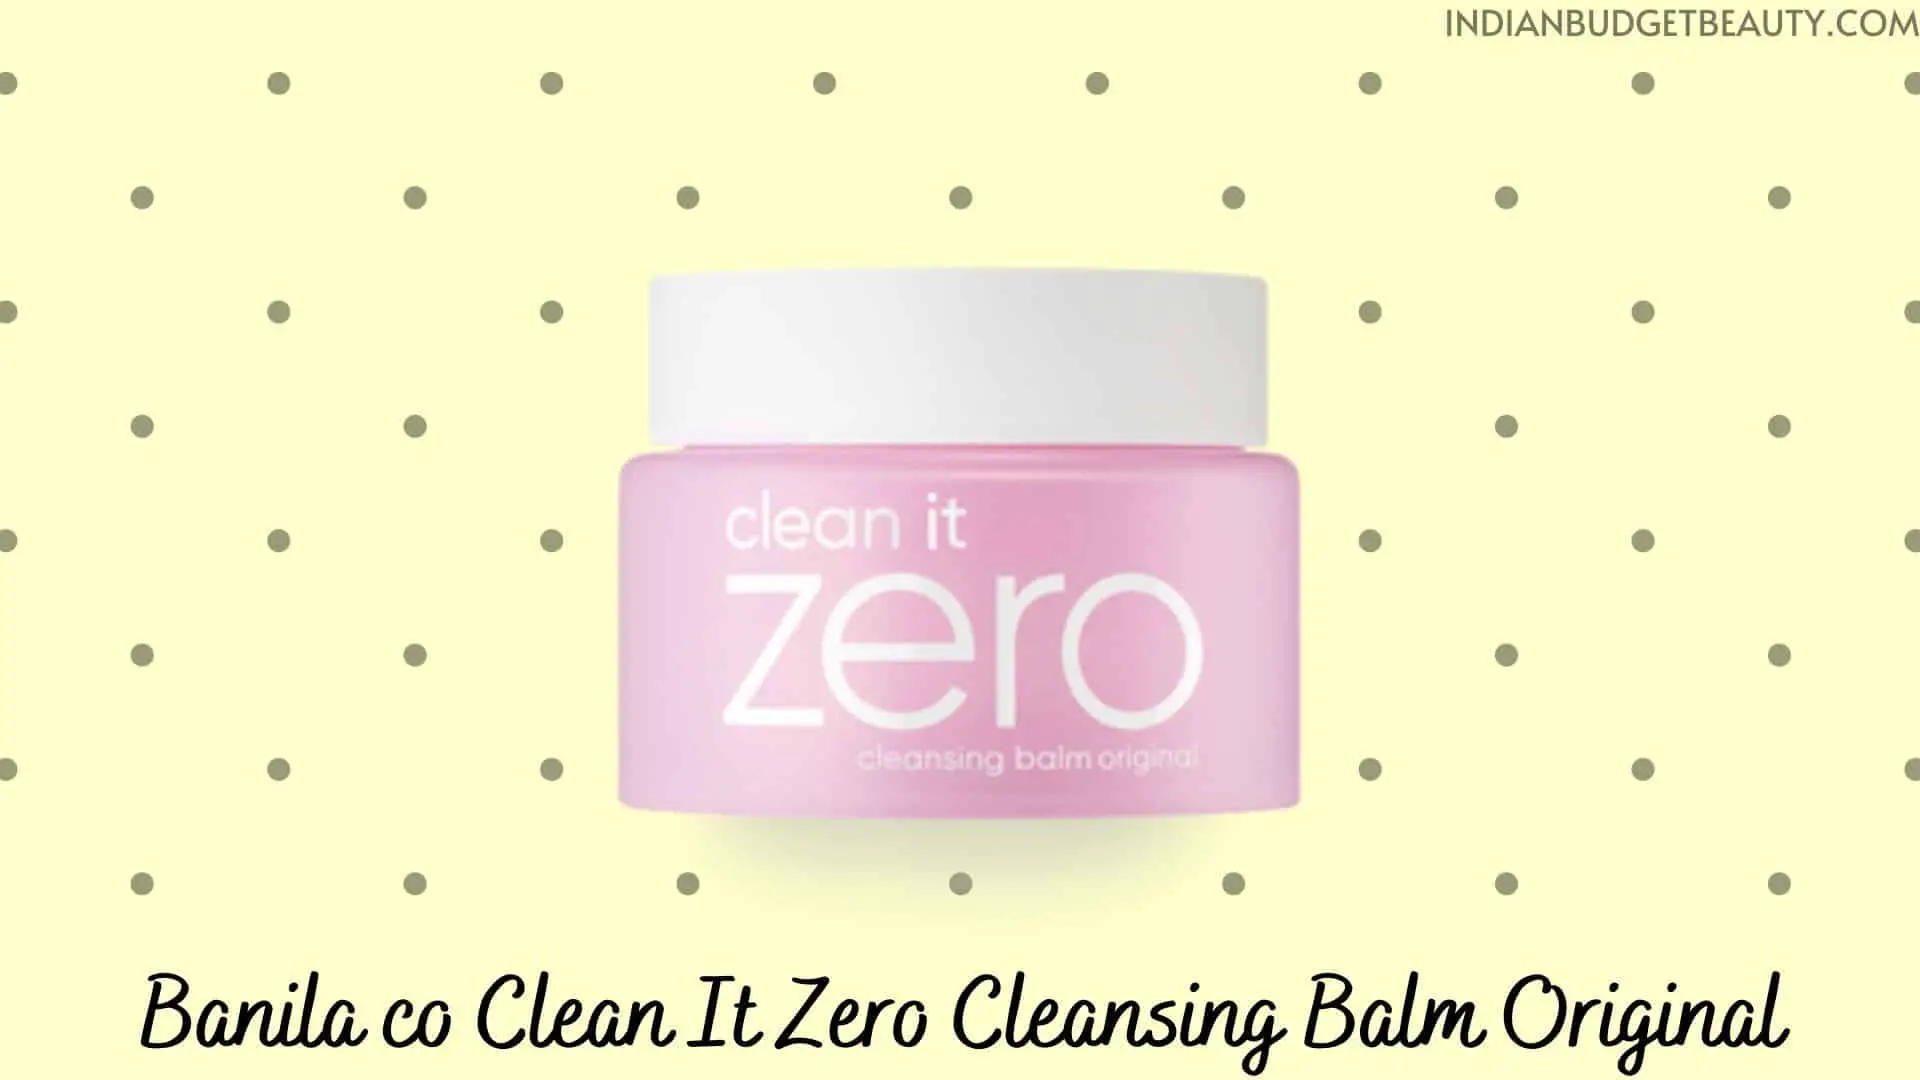 Banila co Clean It Zero Cleansing Balm Original